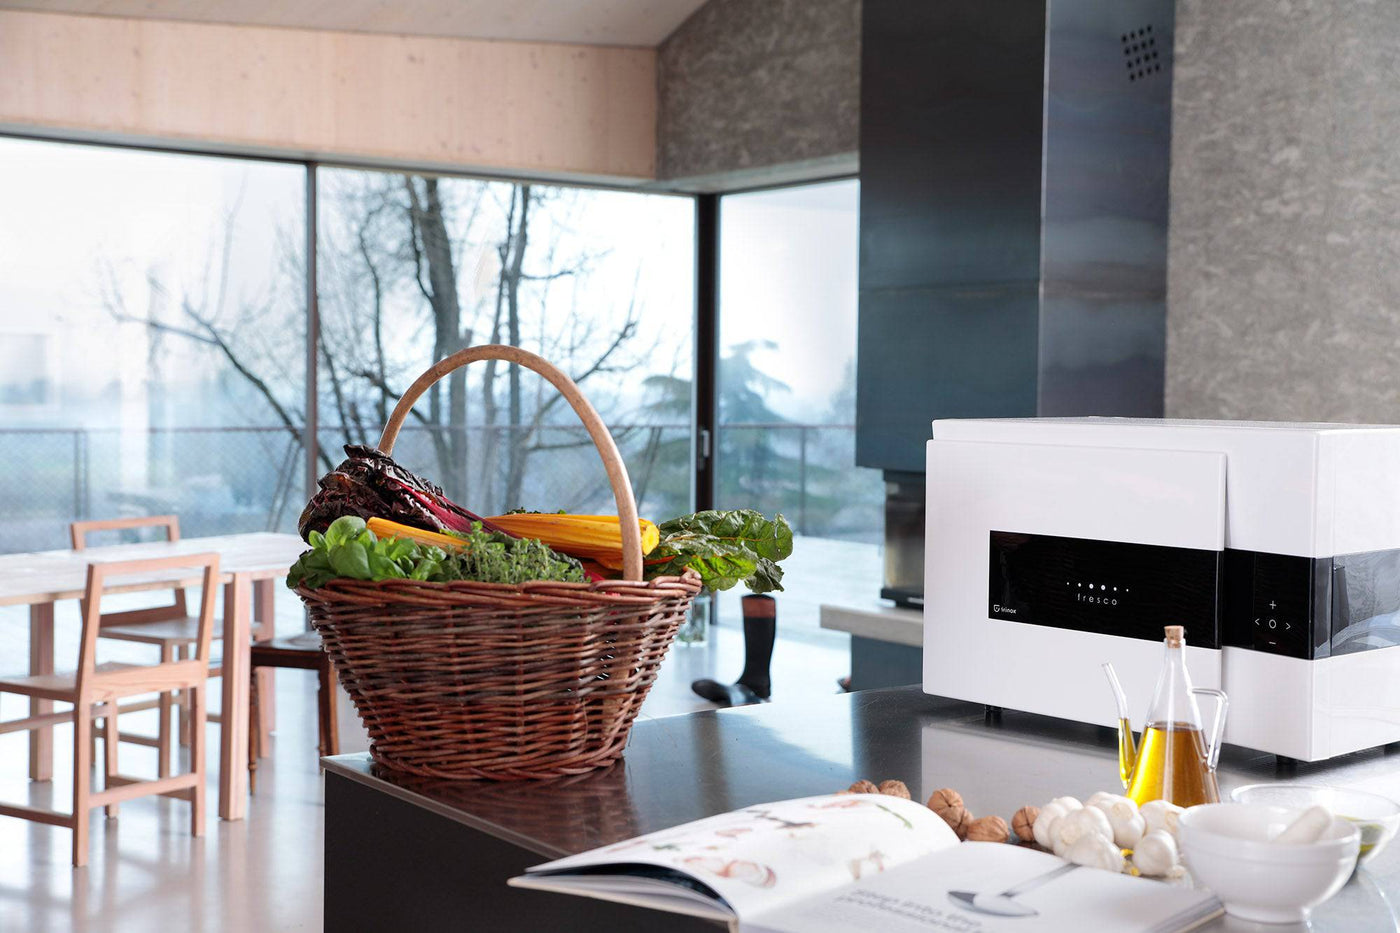 Irinox Fresco Blast Chiller & Flash Freezer, Elegant White - Kitchen Universe